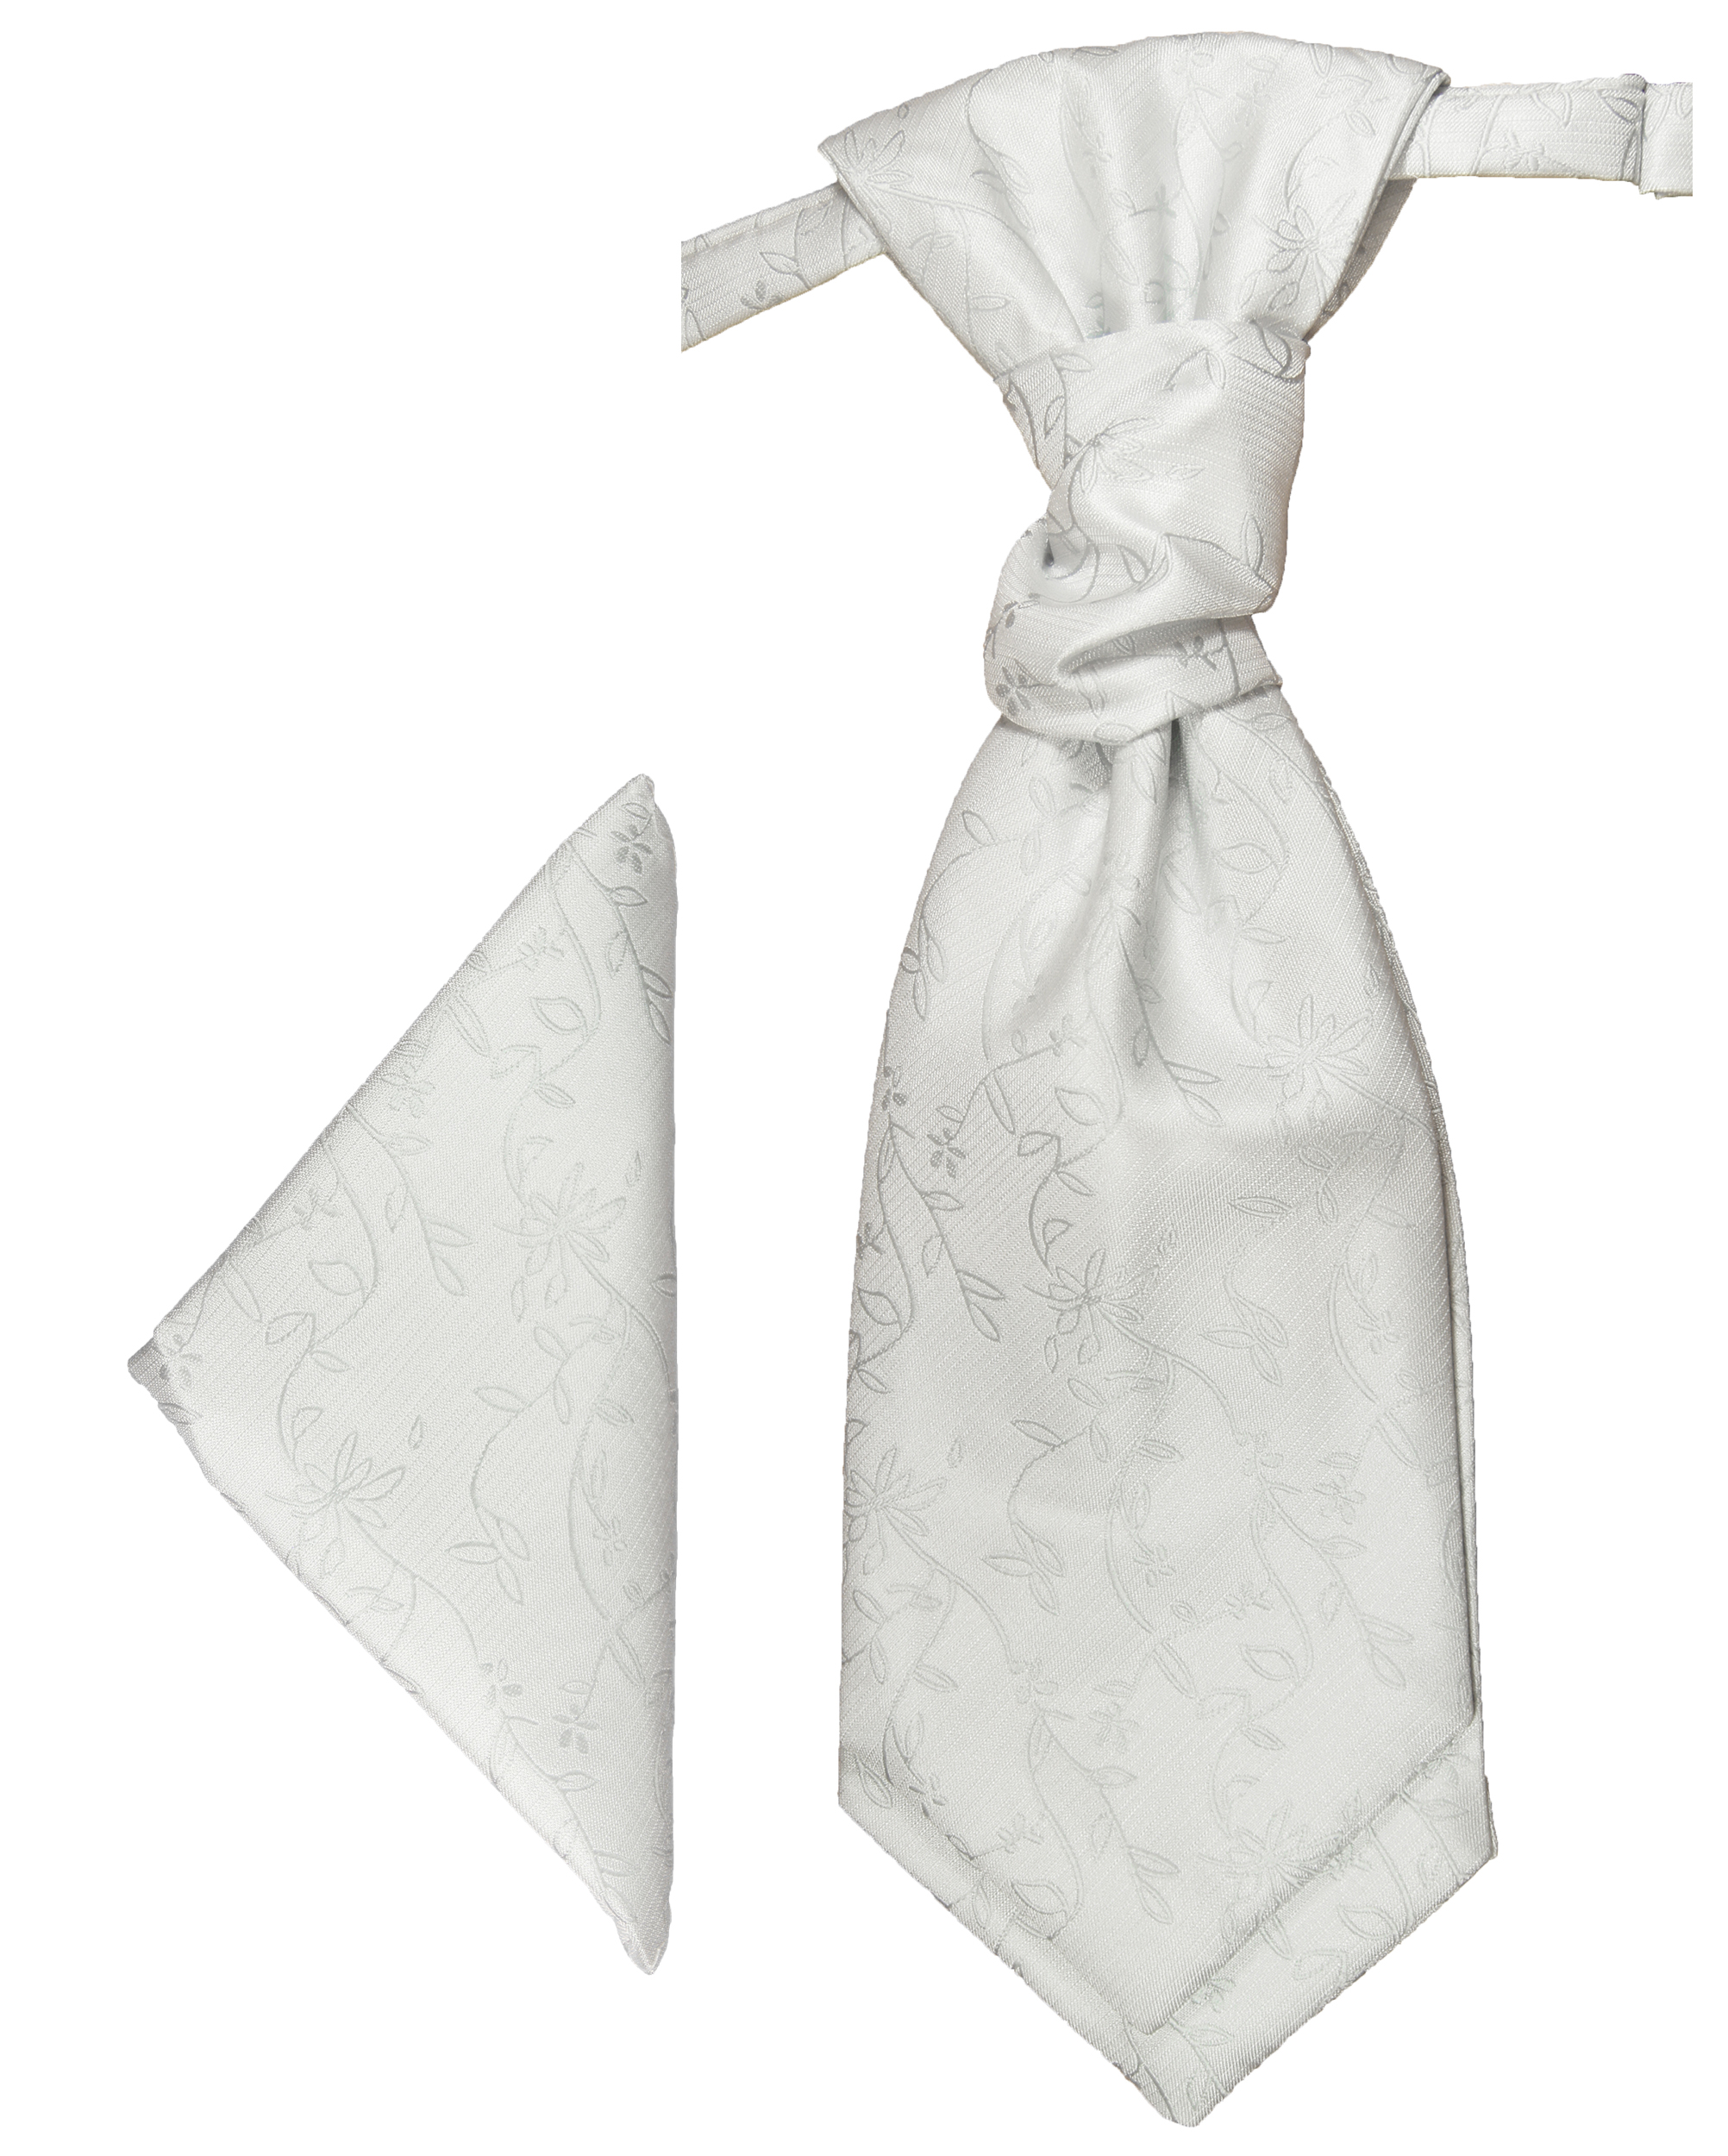 Silver white cravat and pocket square - ASCOT TIE - Paul Malone Shop